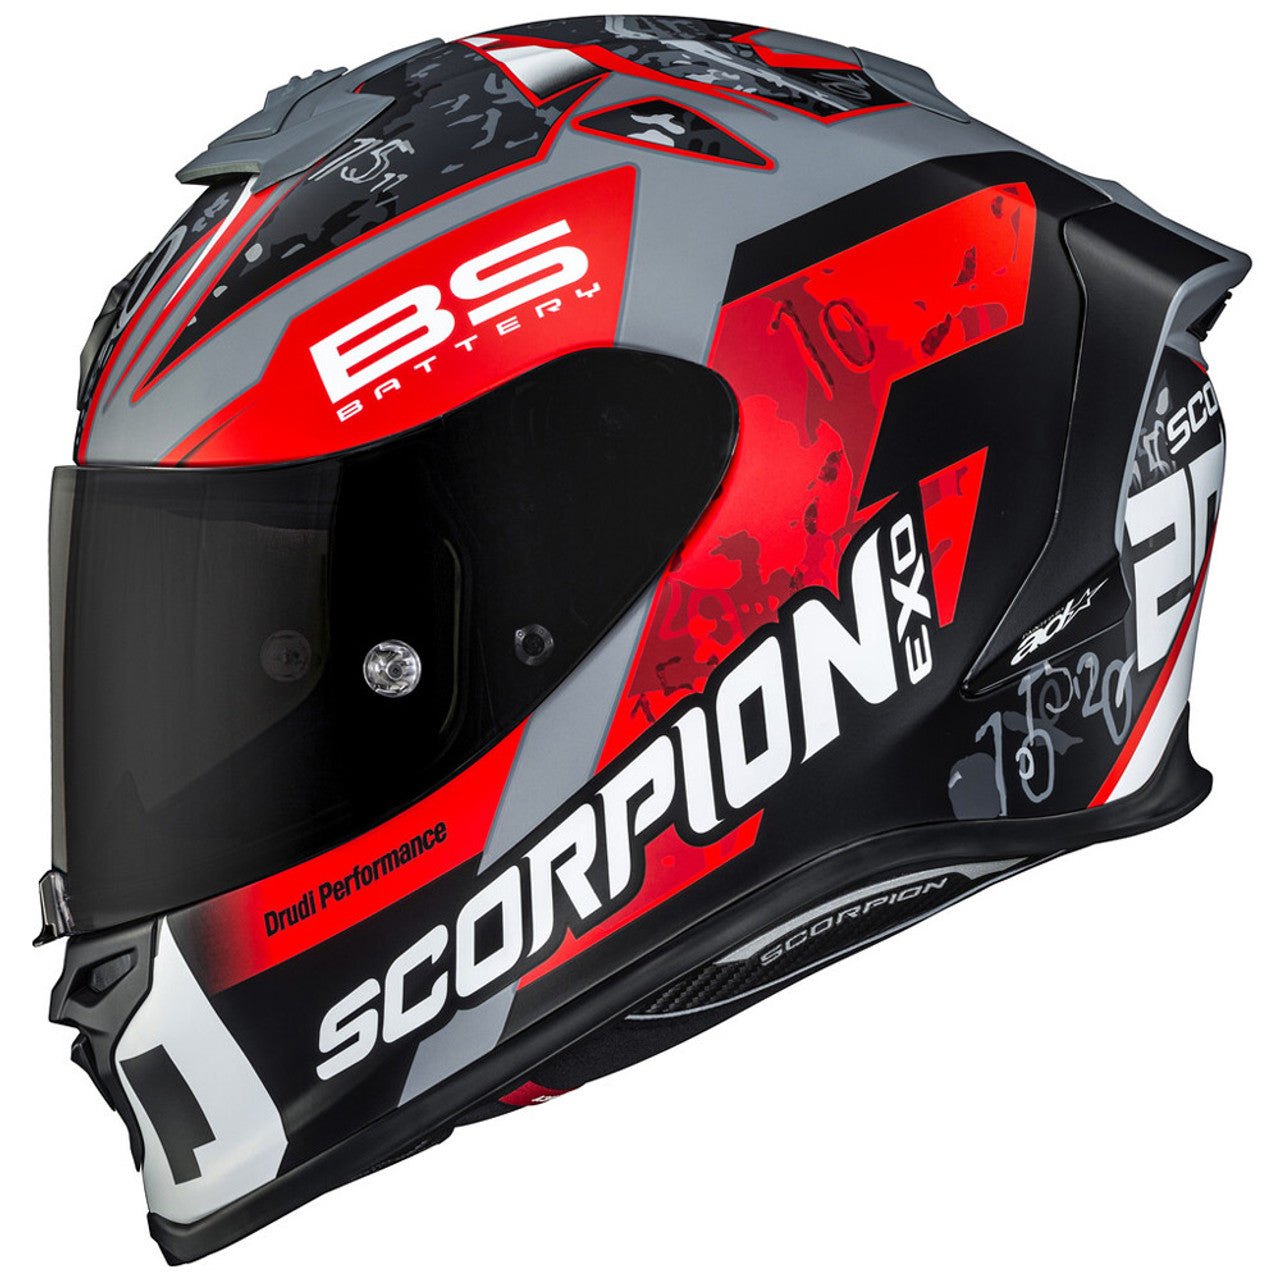 Scorpion EXO-R1 Air Fabio Quartararo Red Helmet XX-Large 2XL XXL